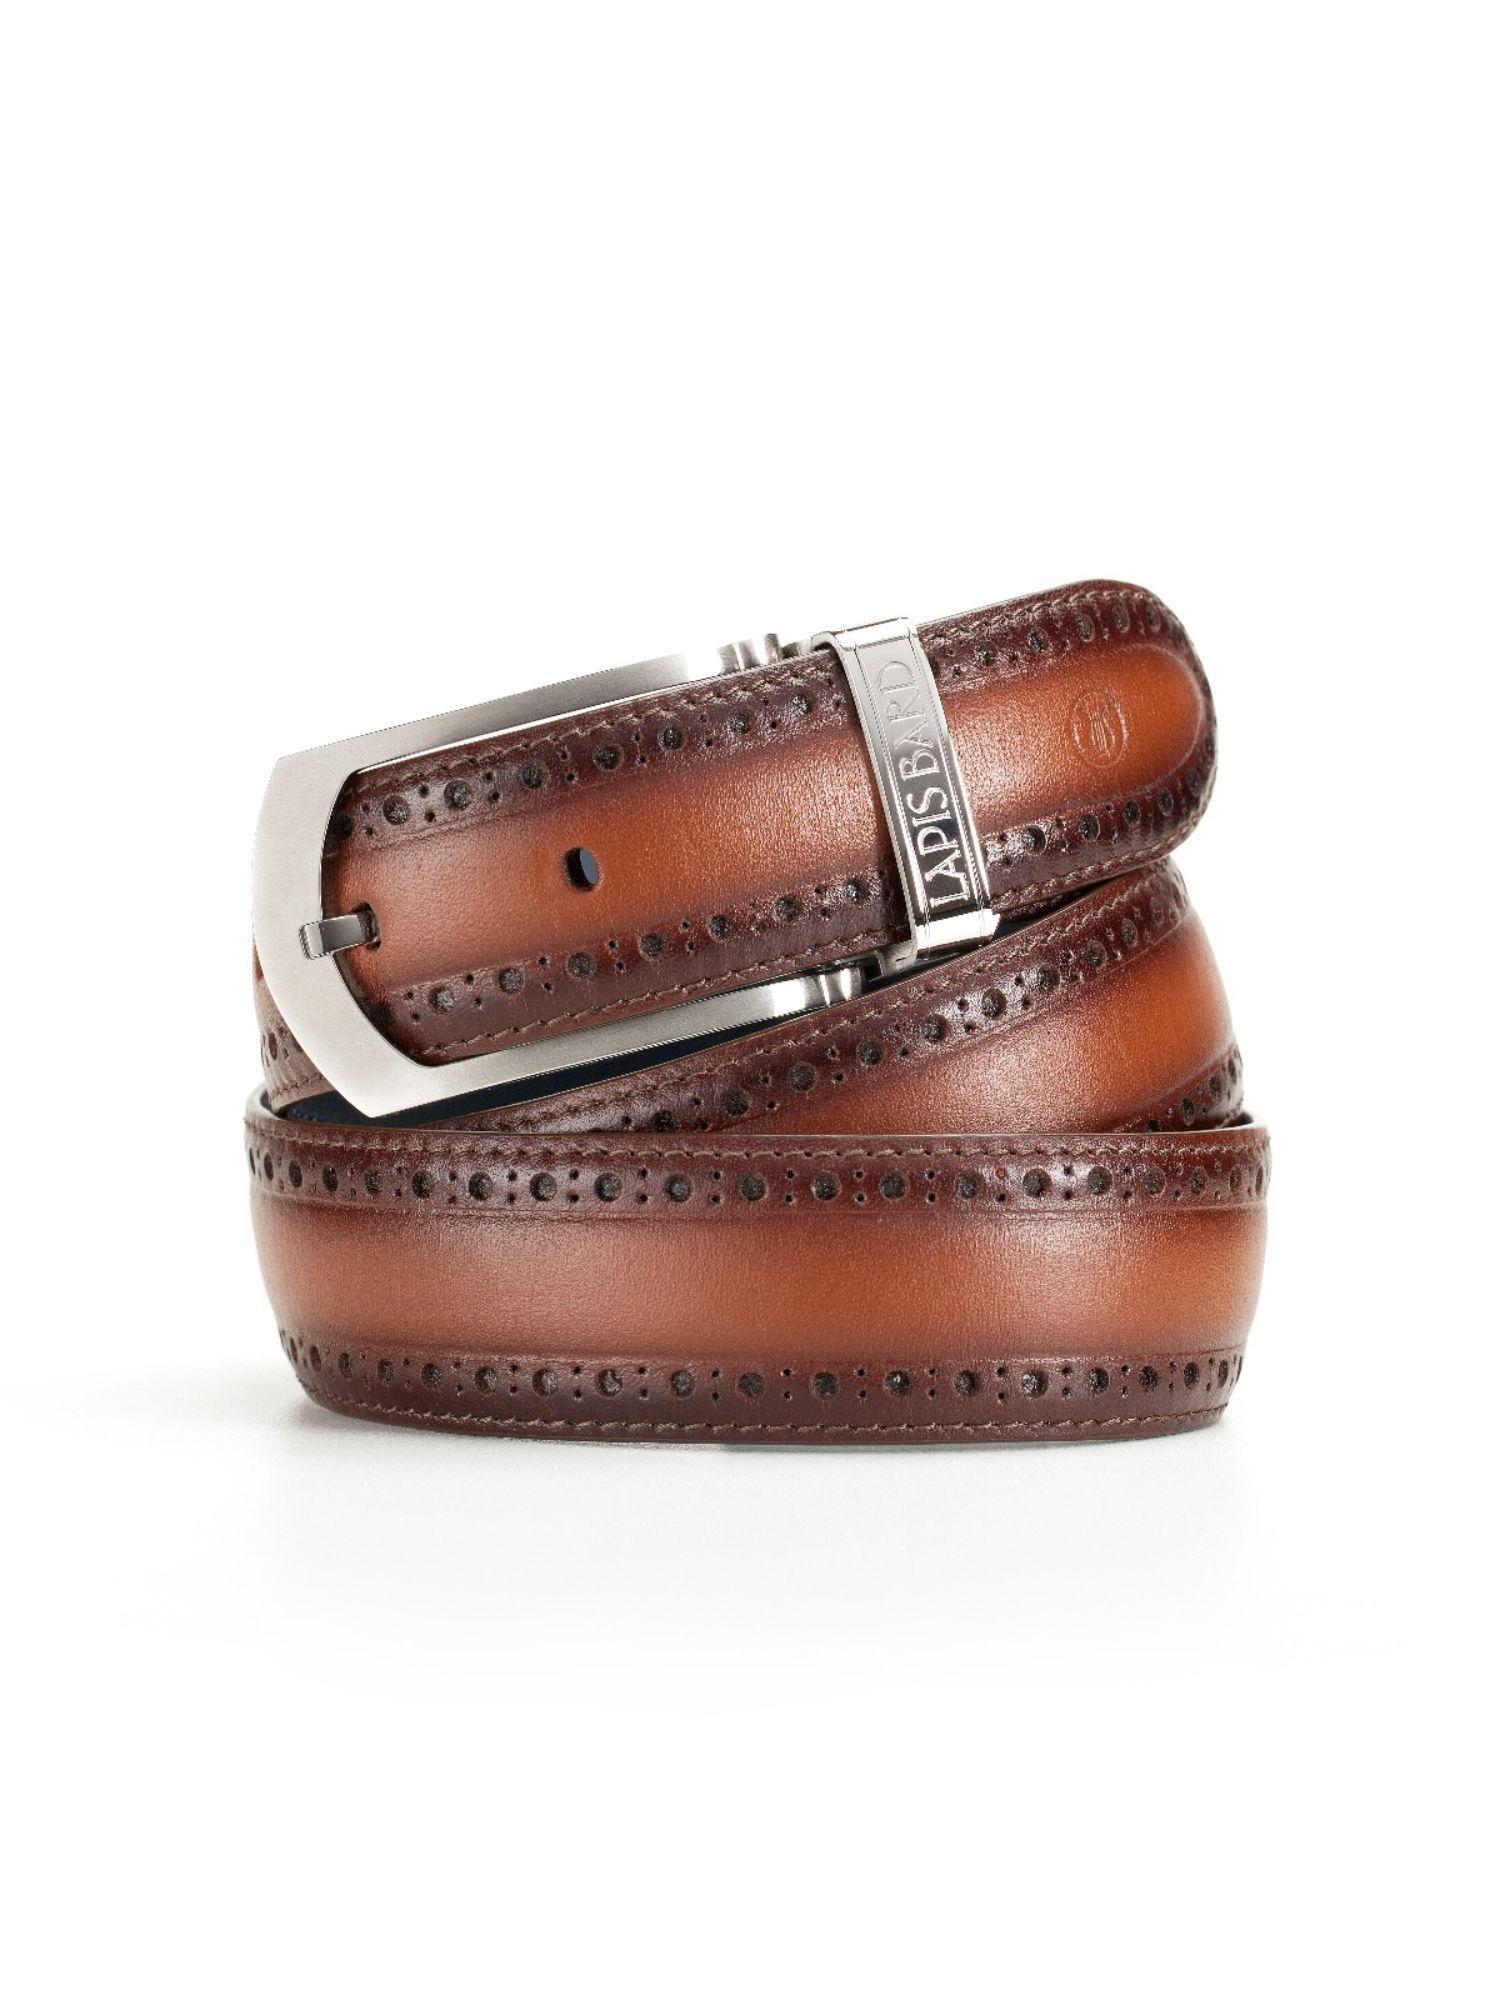 ducorium belt 35mm palladium plated buckle brogue on two tone leather strap cognac